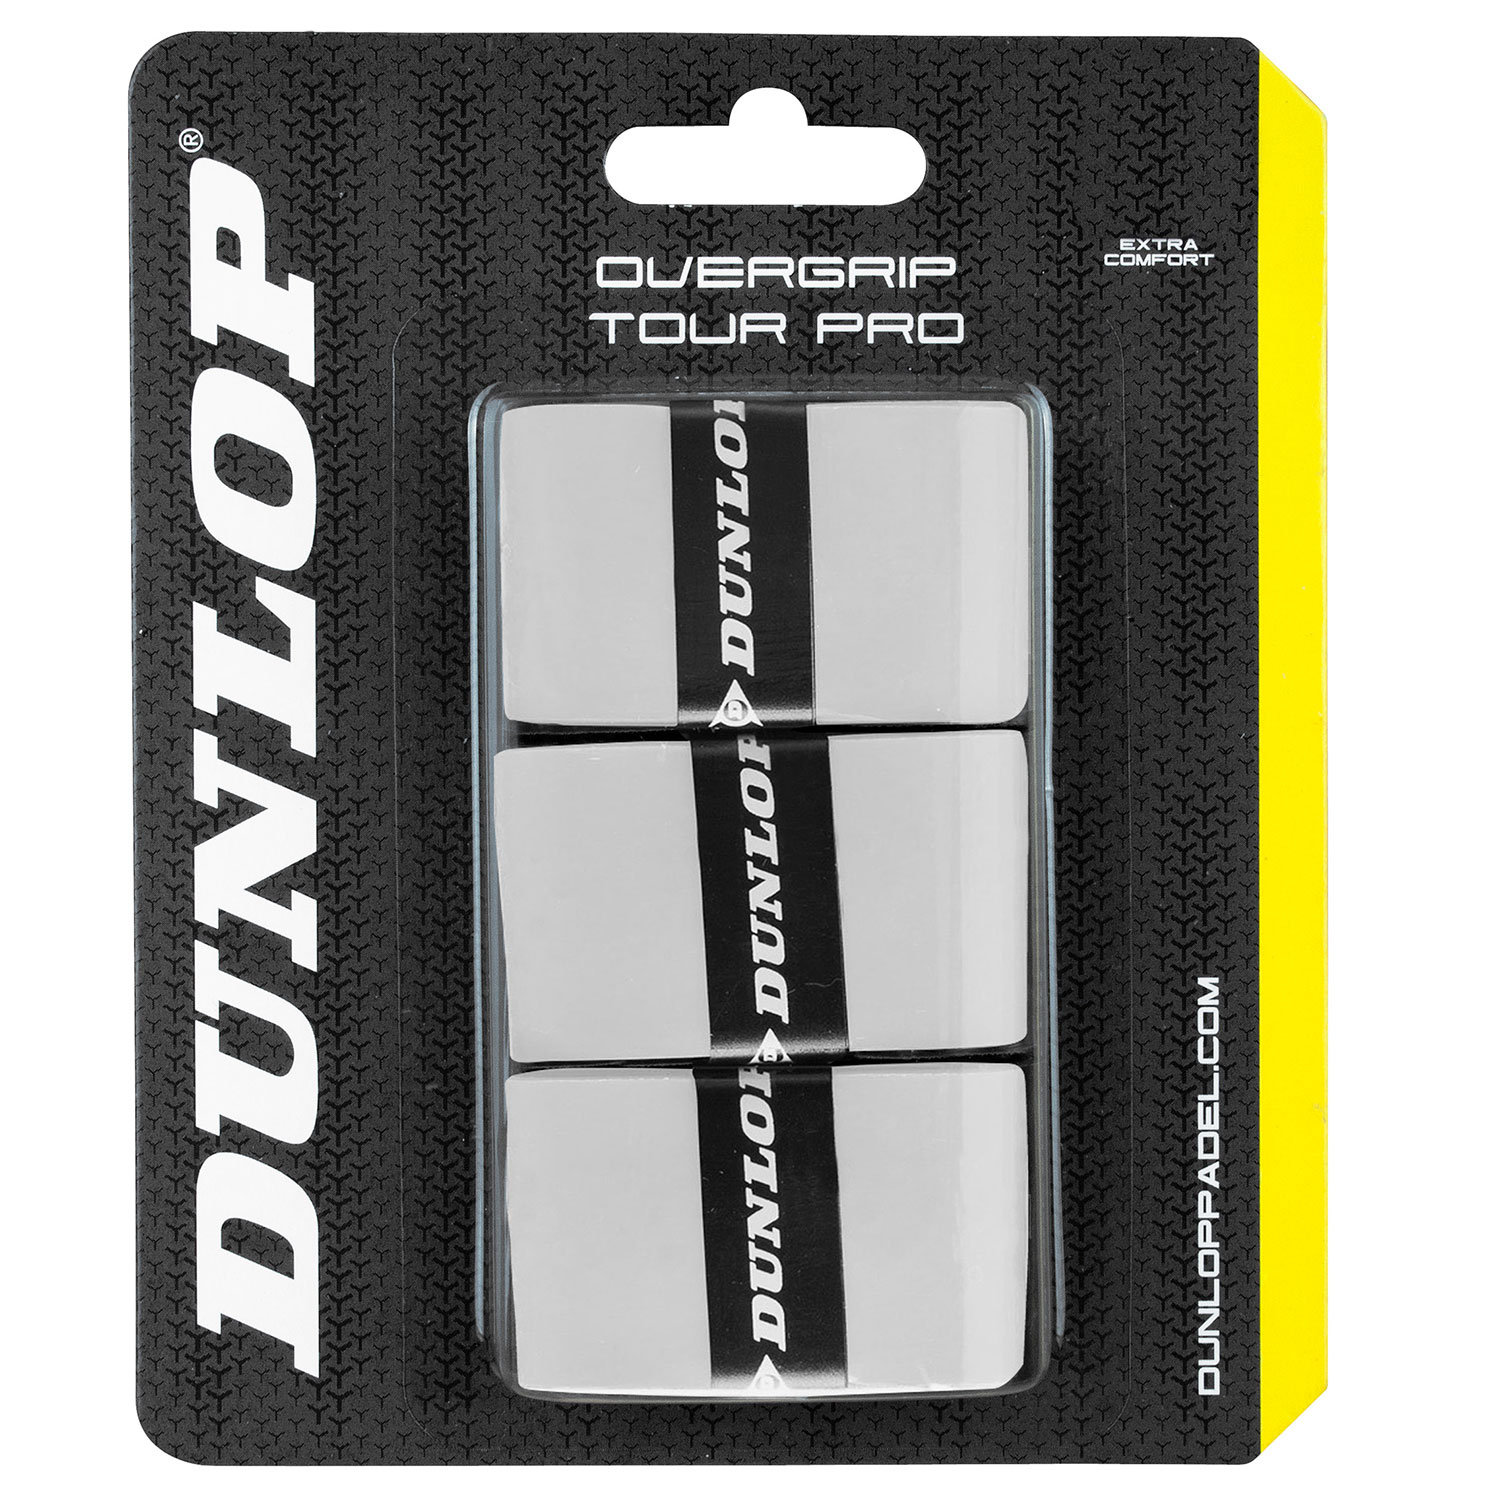 Dunlop Tour Pro x 3 Overgrip - White